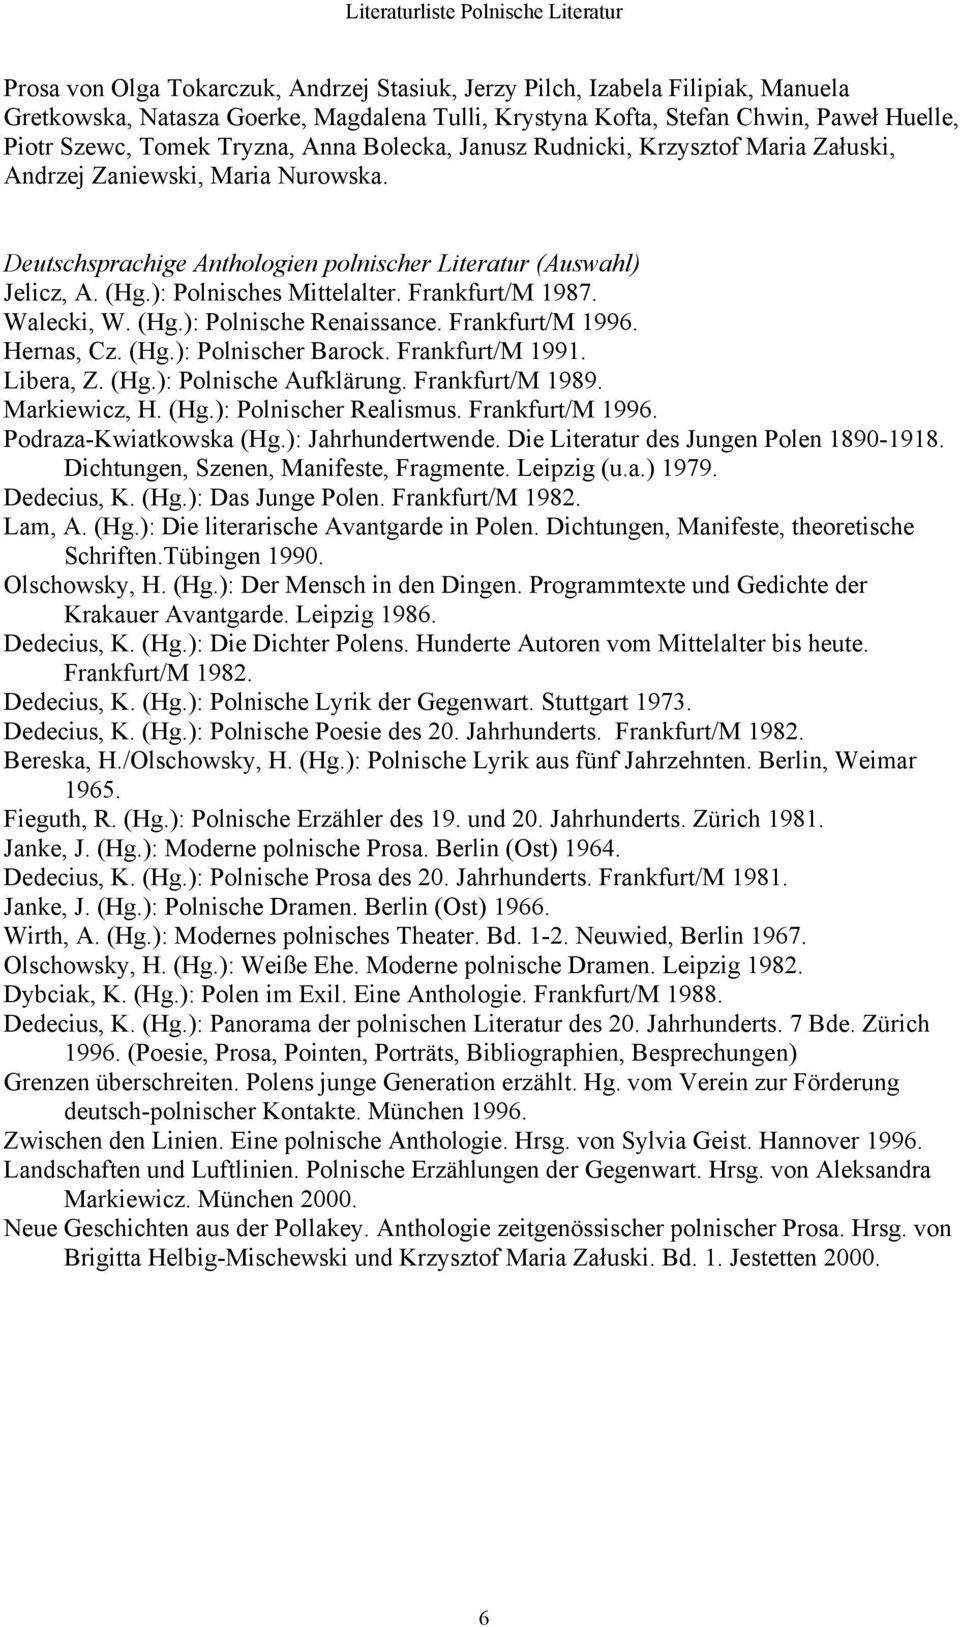 Frankfurt/M 1987. Walecki, W. (Hg.): Polnische Renaissance. Frankfurt/M 1996. Hernas, Cz. (Hg.): Polnischer Barock. Frankfurt/M 1991. Libera, Z. (Hg.): Polnische Aufklärung. Frankfurt/M 1989.